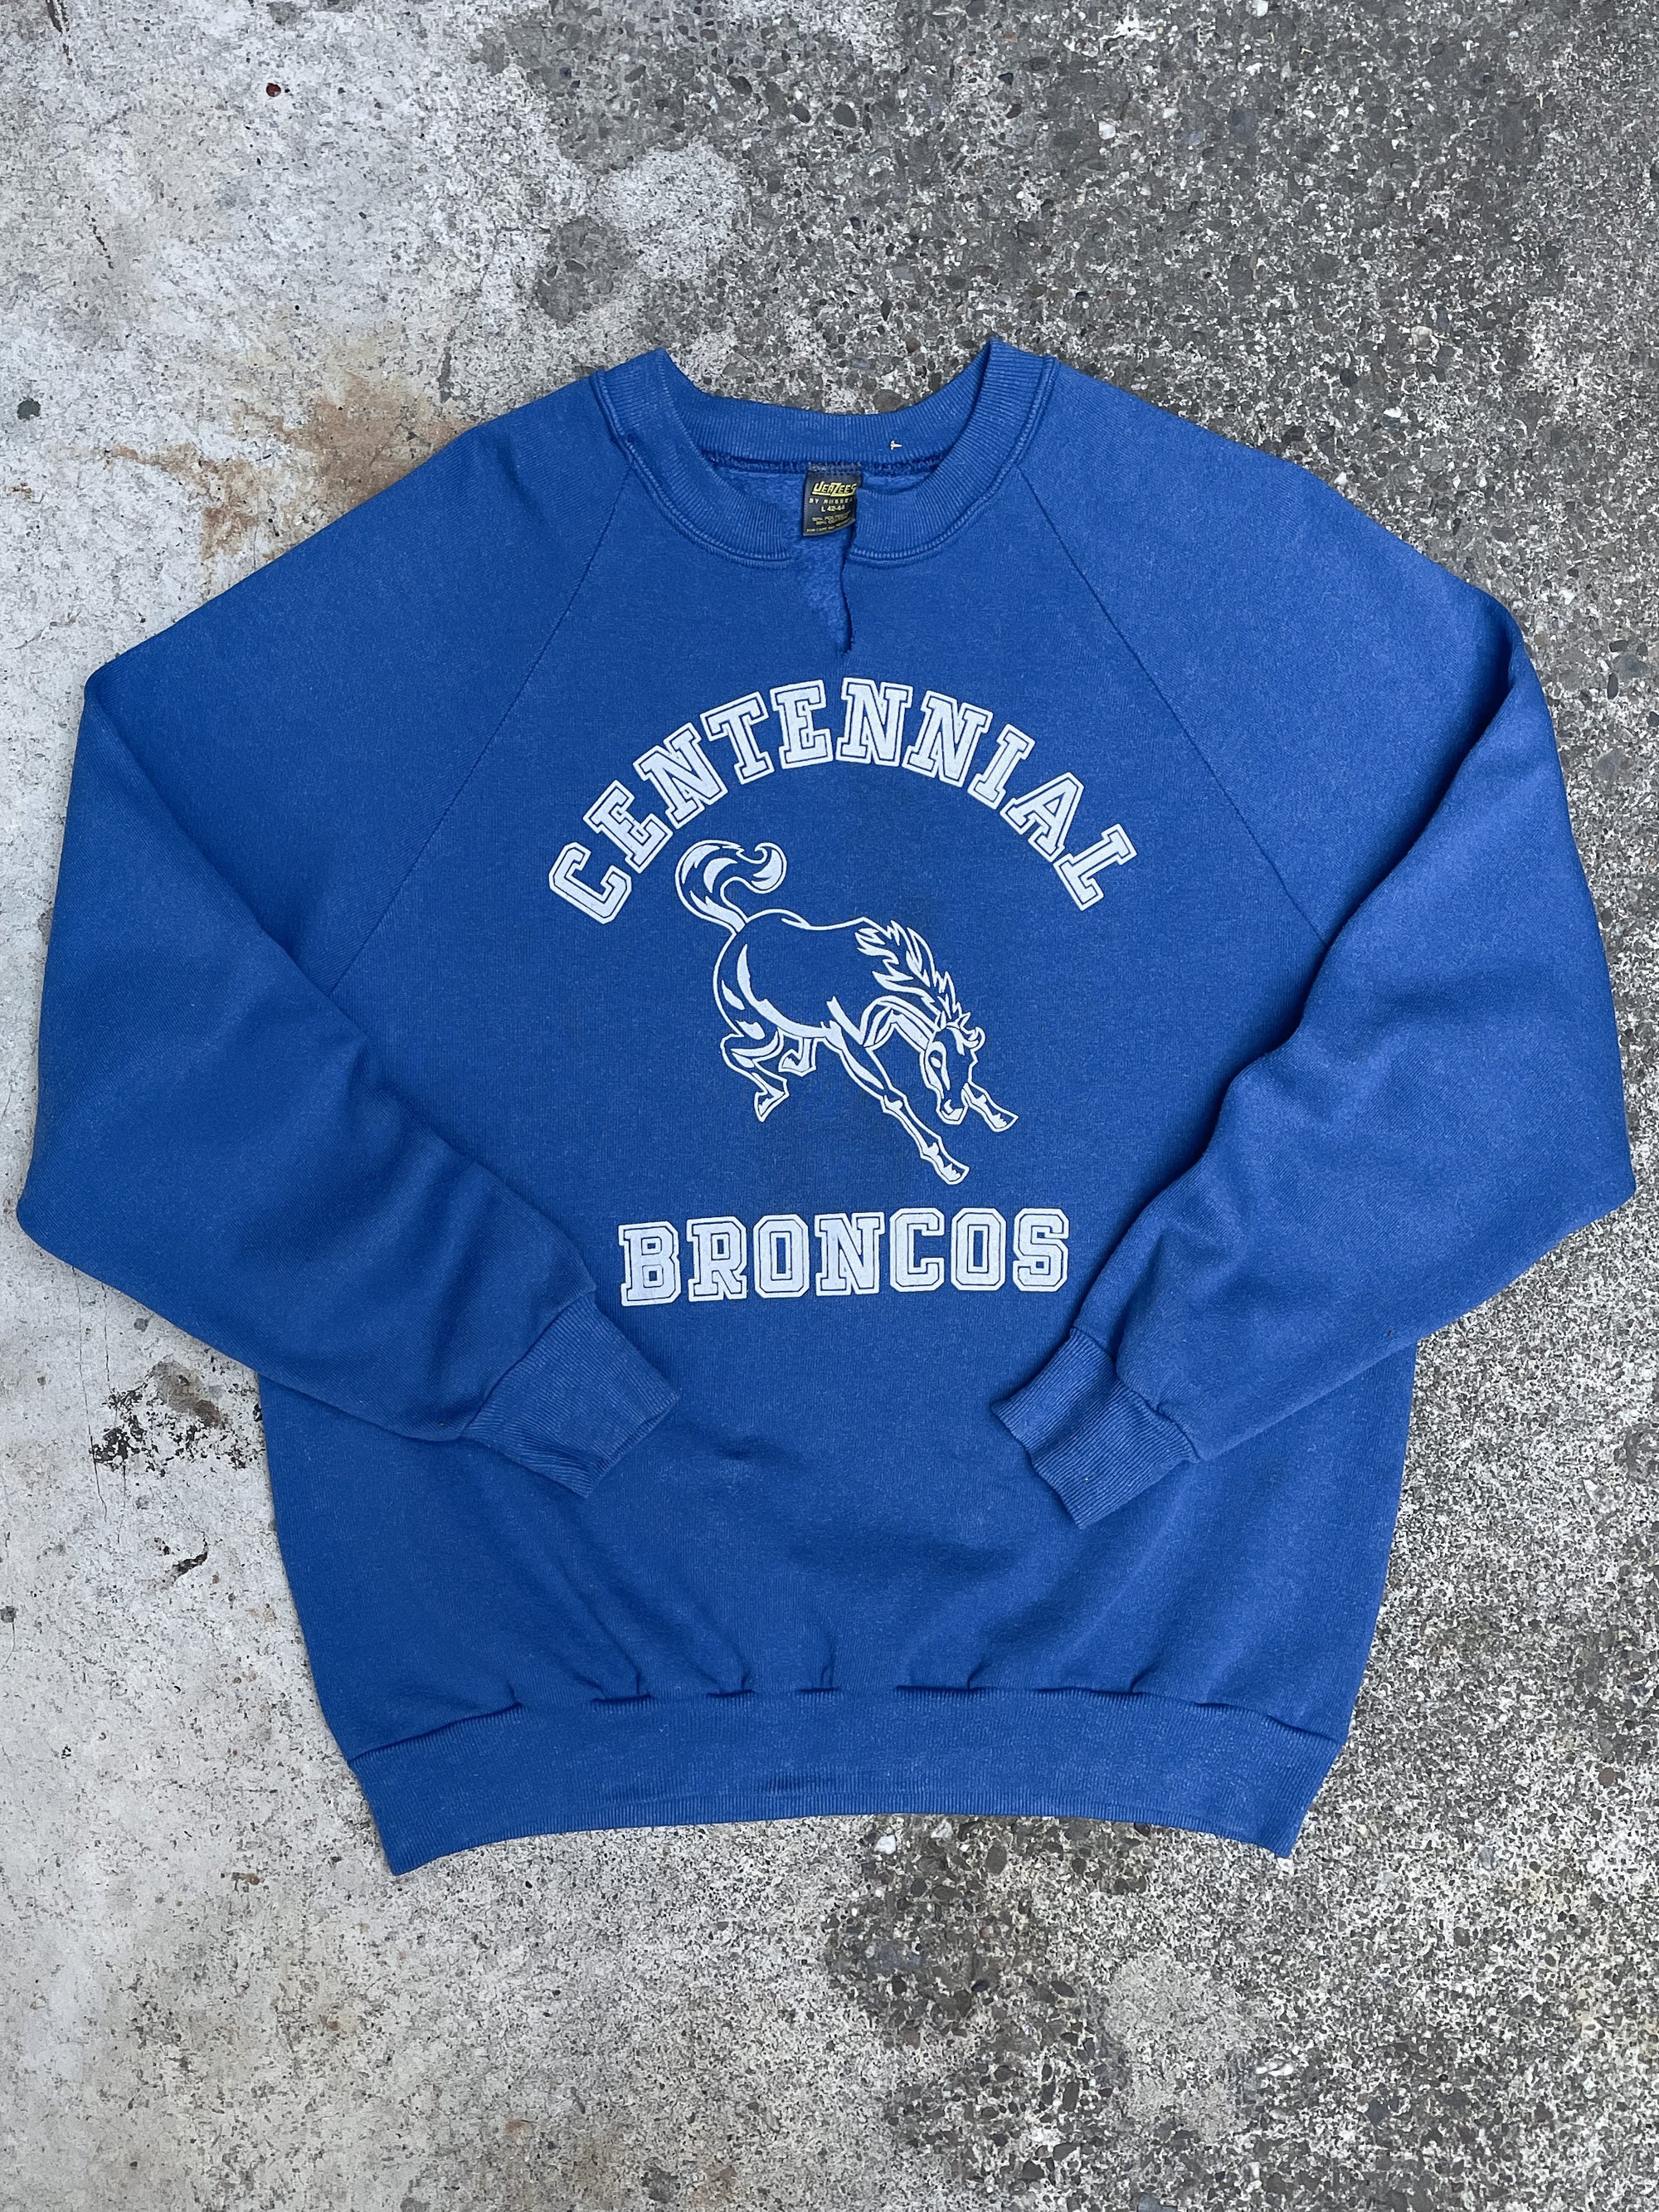 1980s “Centennial Broncos” Distressed Raglan Sweatshirt (M)